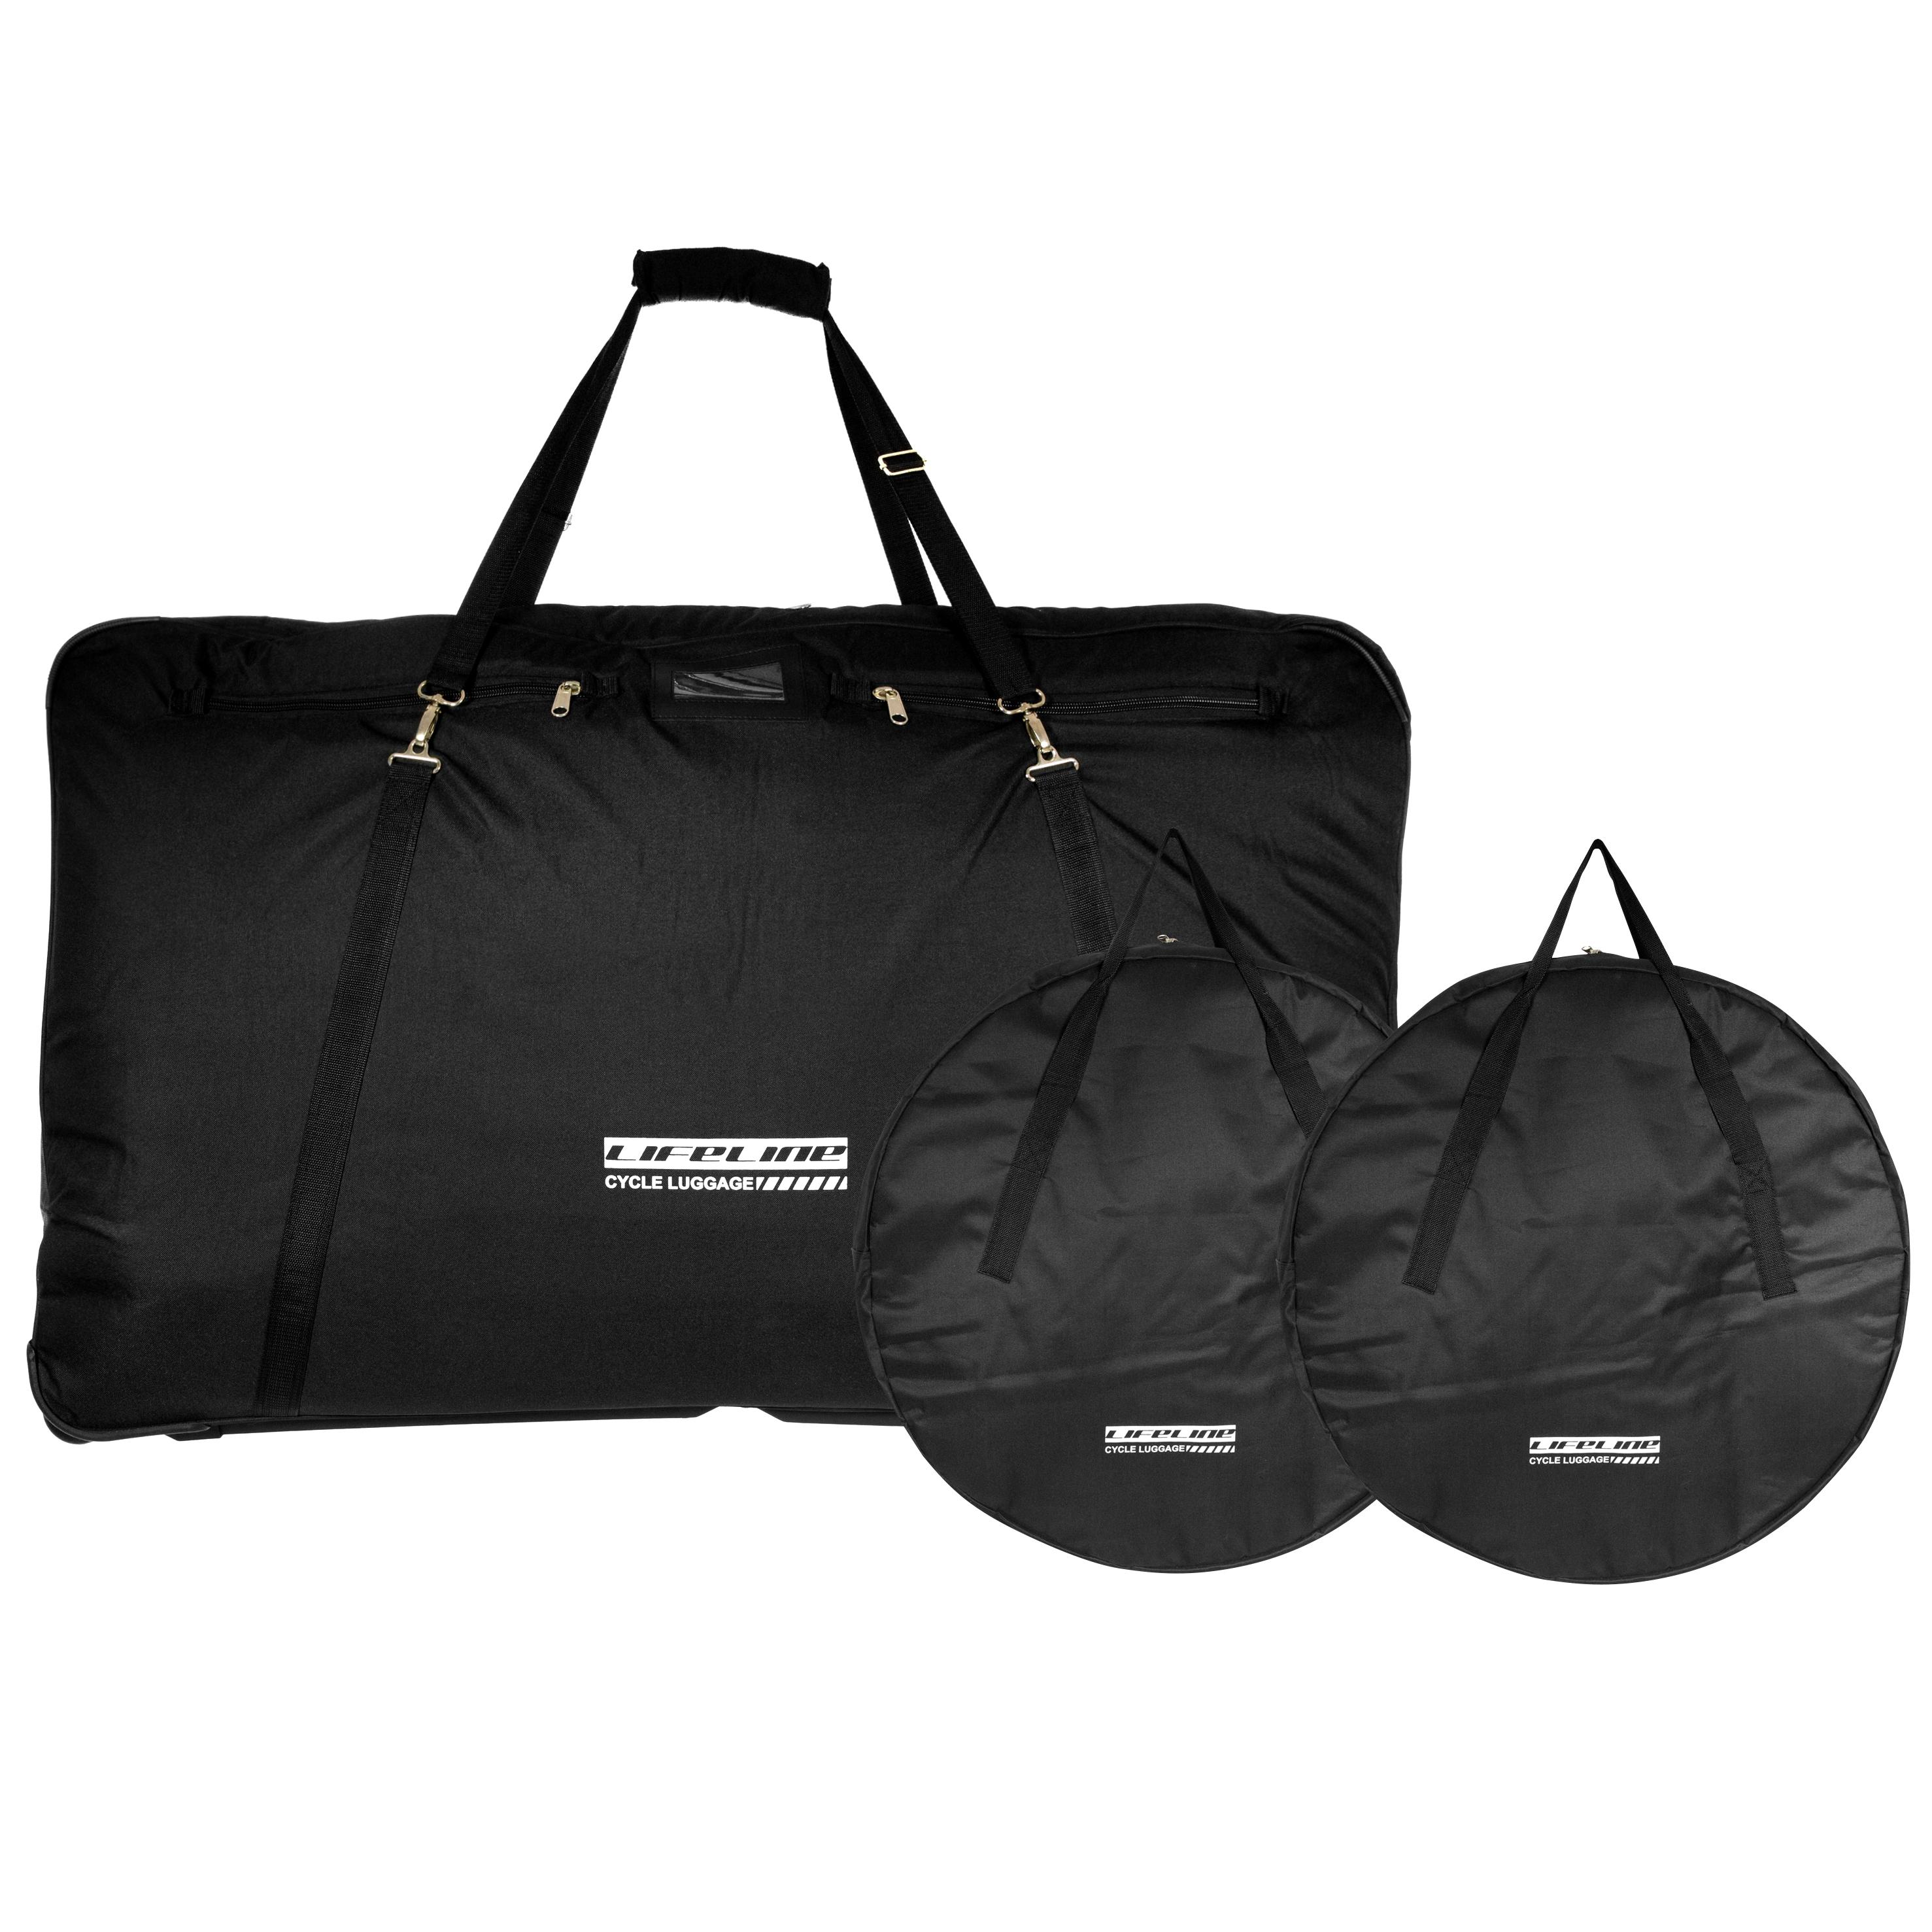 LifeLine Bike Travel Bag with Wheel Bags, Black